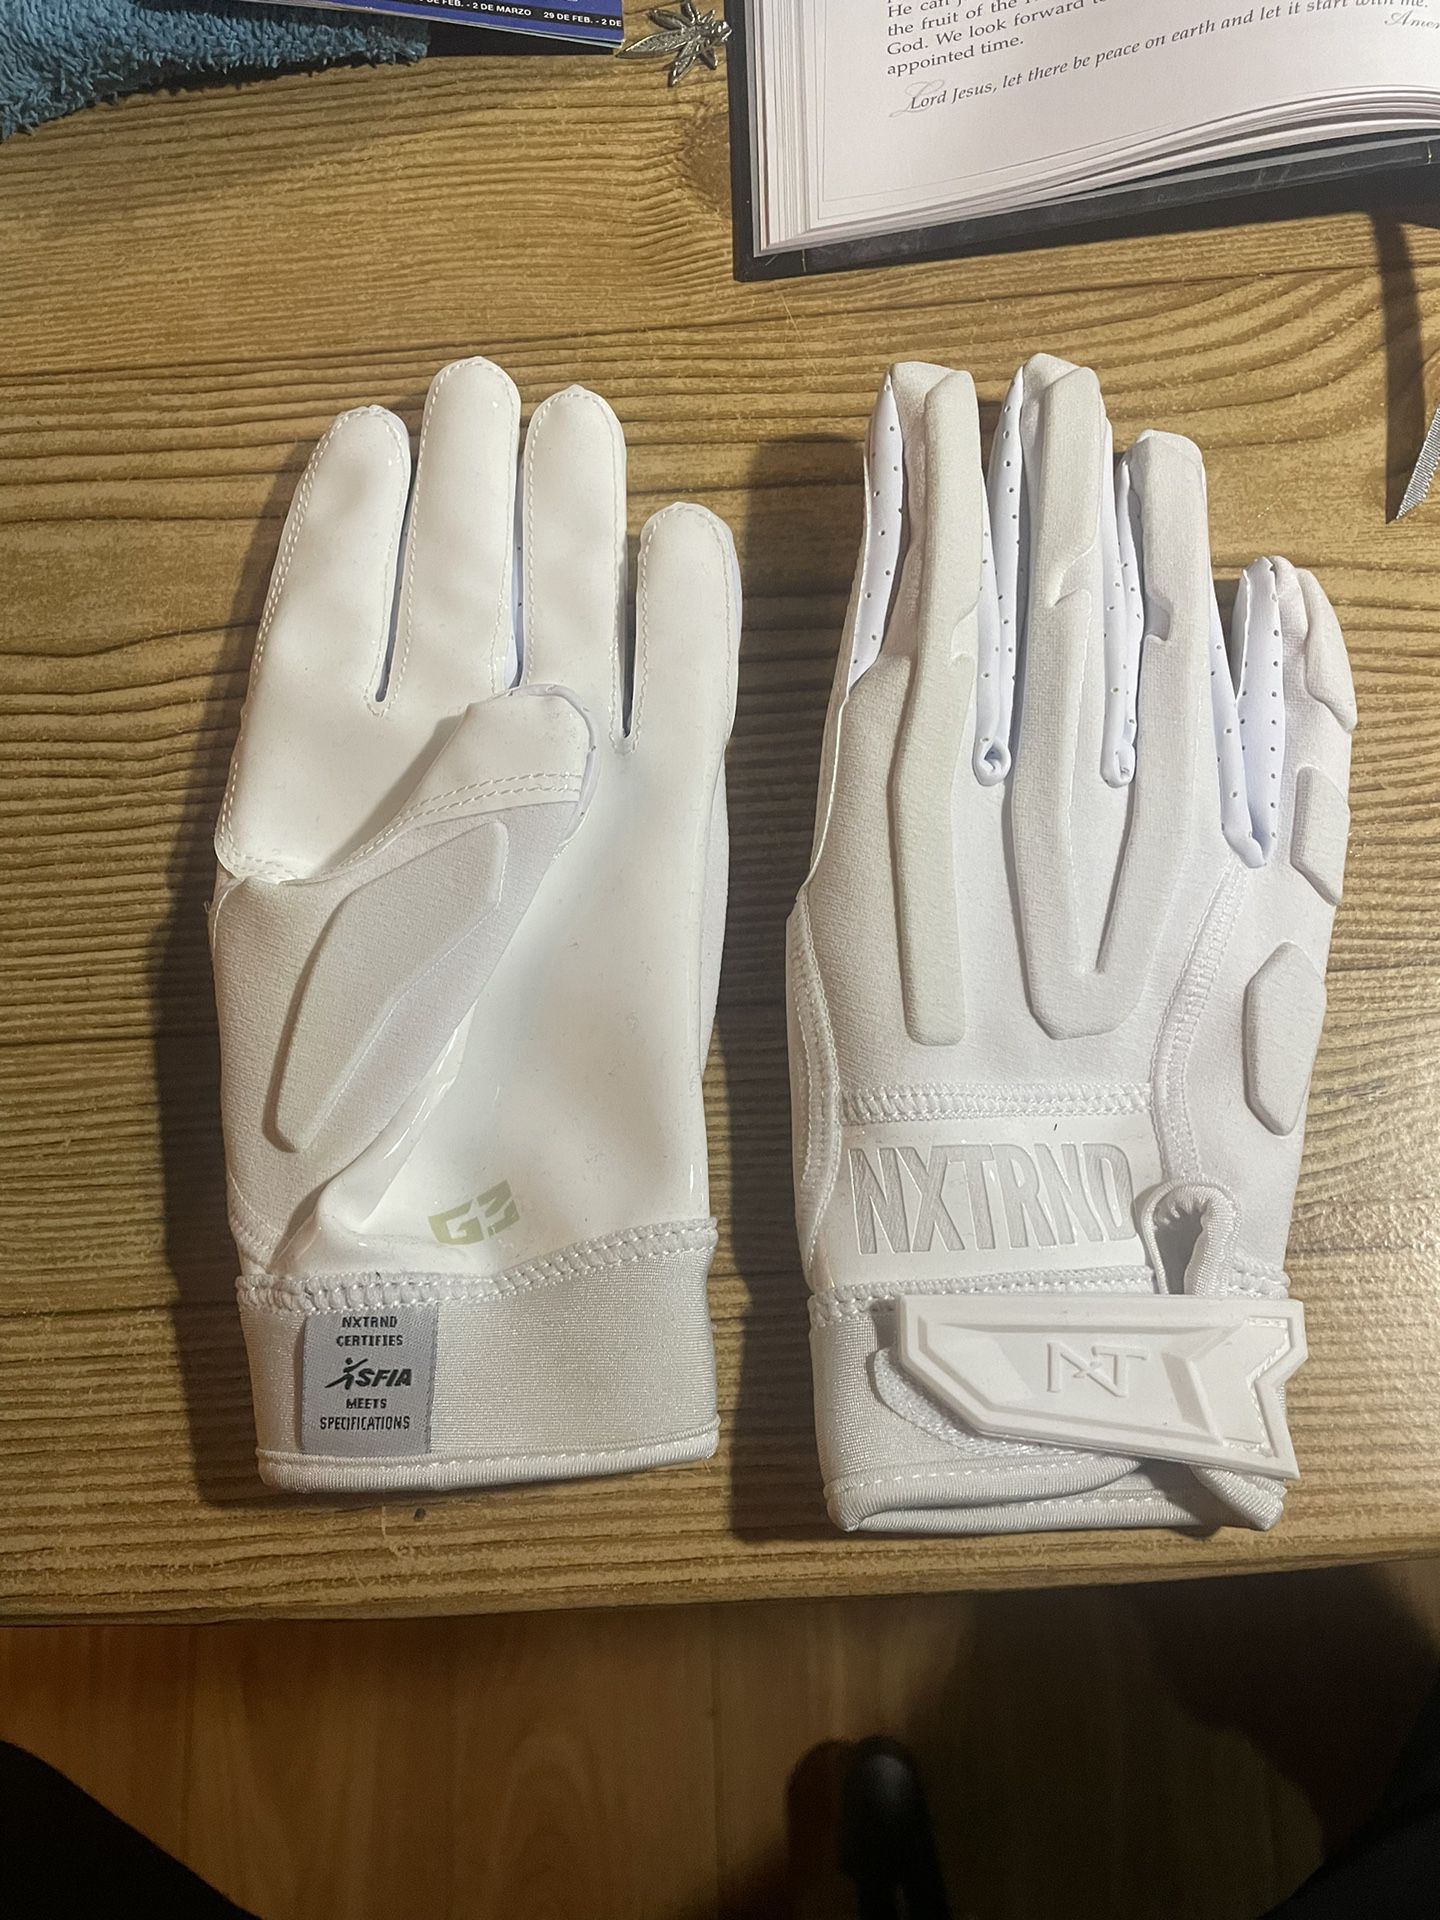 NXTRND G3 Padded Gloves ( Size Medium)